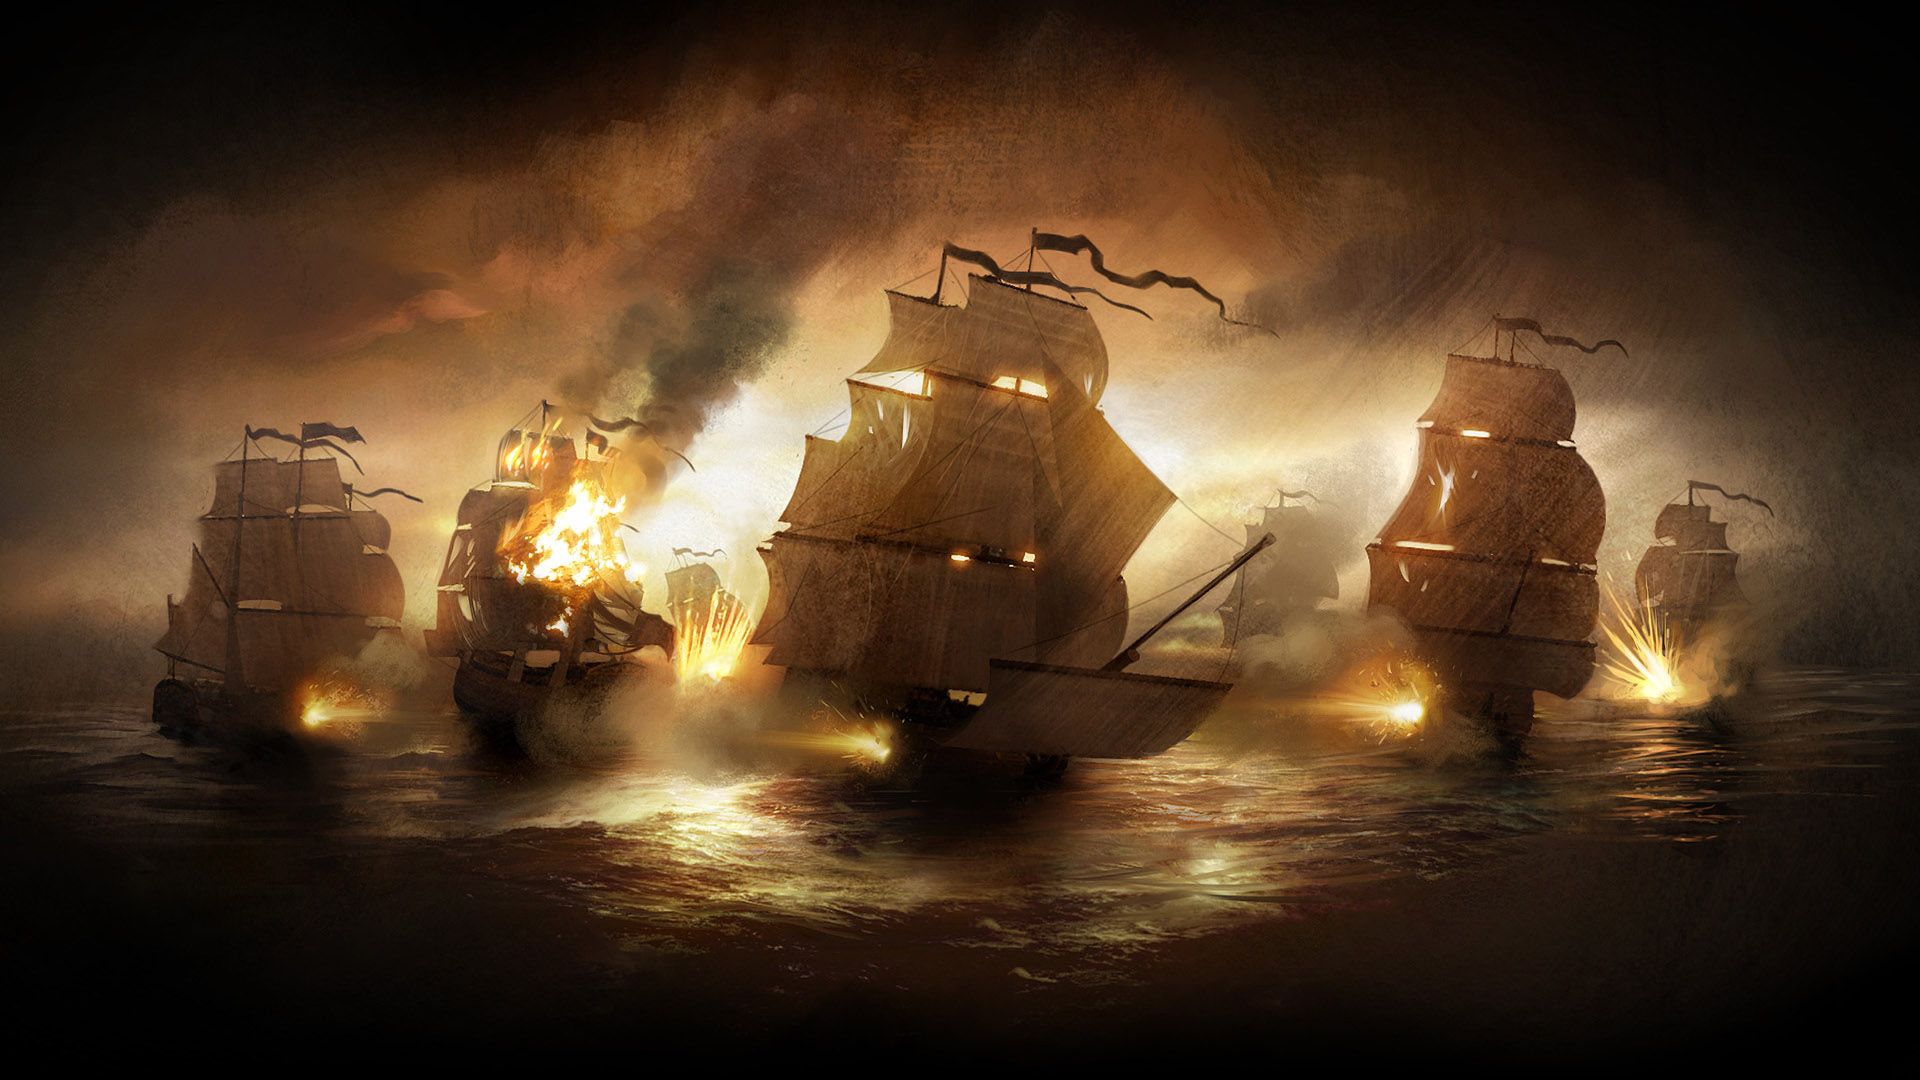 Pirate Ship Wallpaper Hd - Ship On Fire Background - HD Wallpaper 